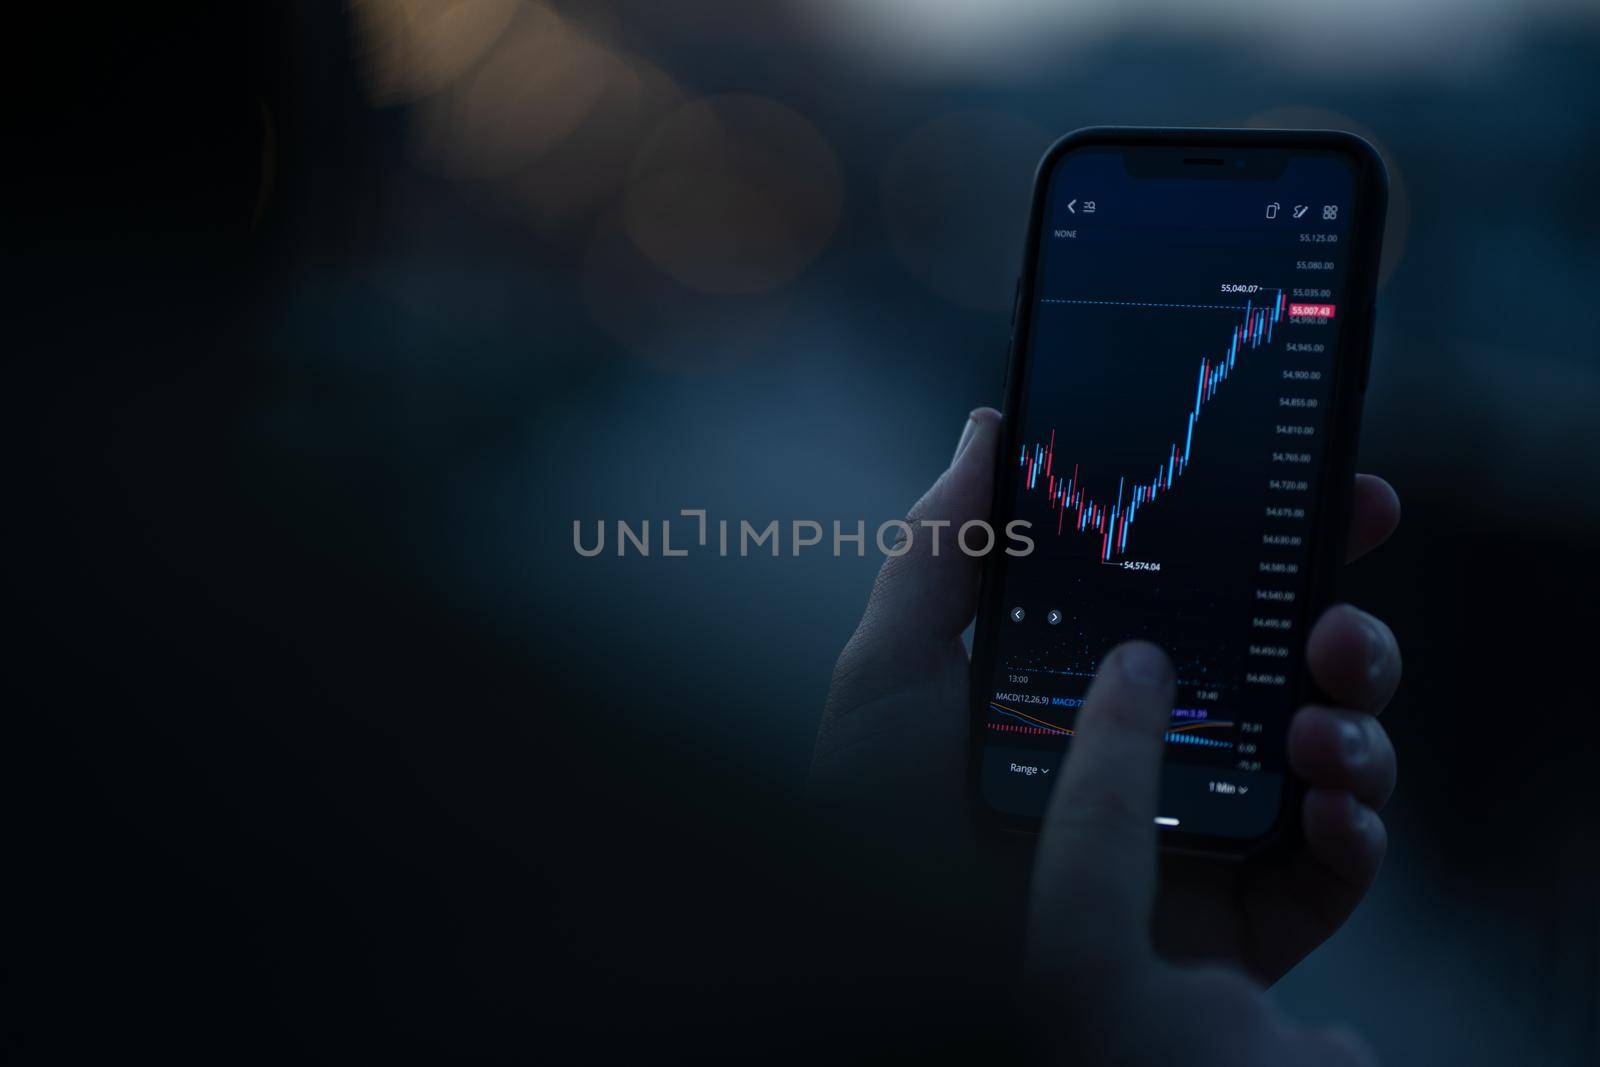 Investor checking stock exchange market data in mobile app on smartphone by vkstock